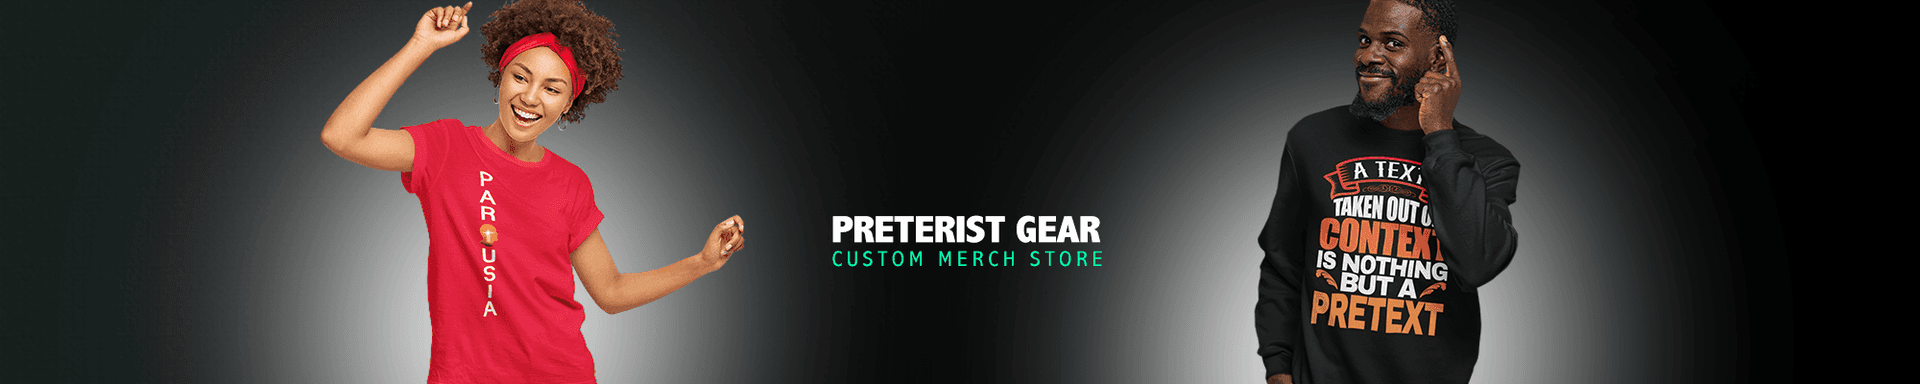 Banner for Preterist Gear